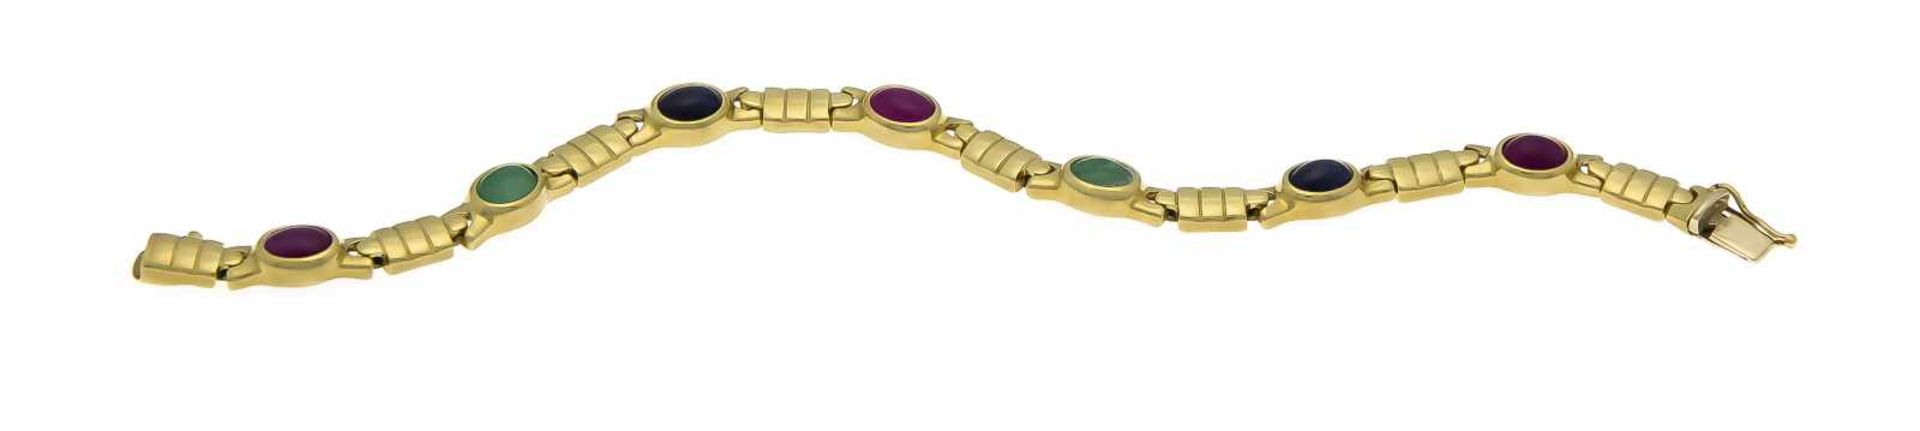 Saphir-Rubin-Smaragd-Armband GG 750/000 mit 3 ovalen Rubin- und je 2 ovalen Smaragd- undSaphir- - Image 2 of 2